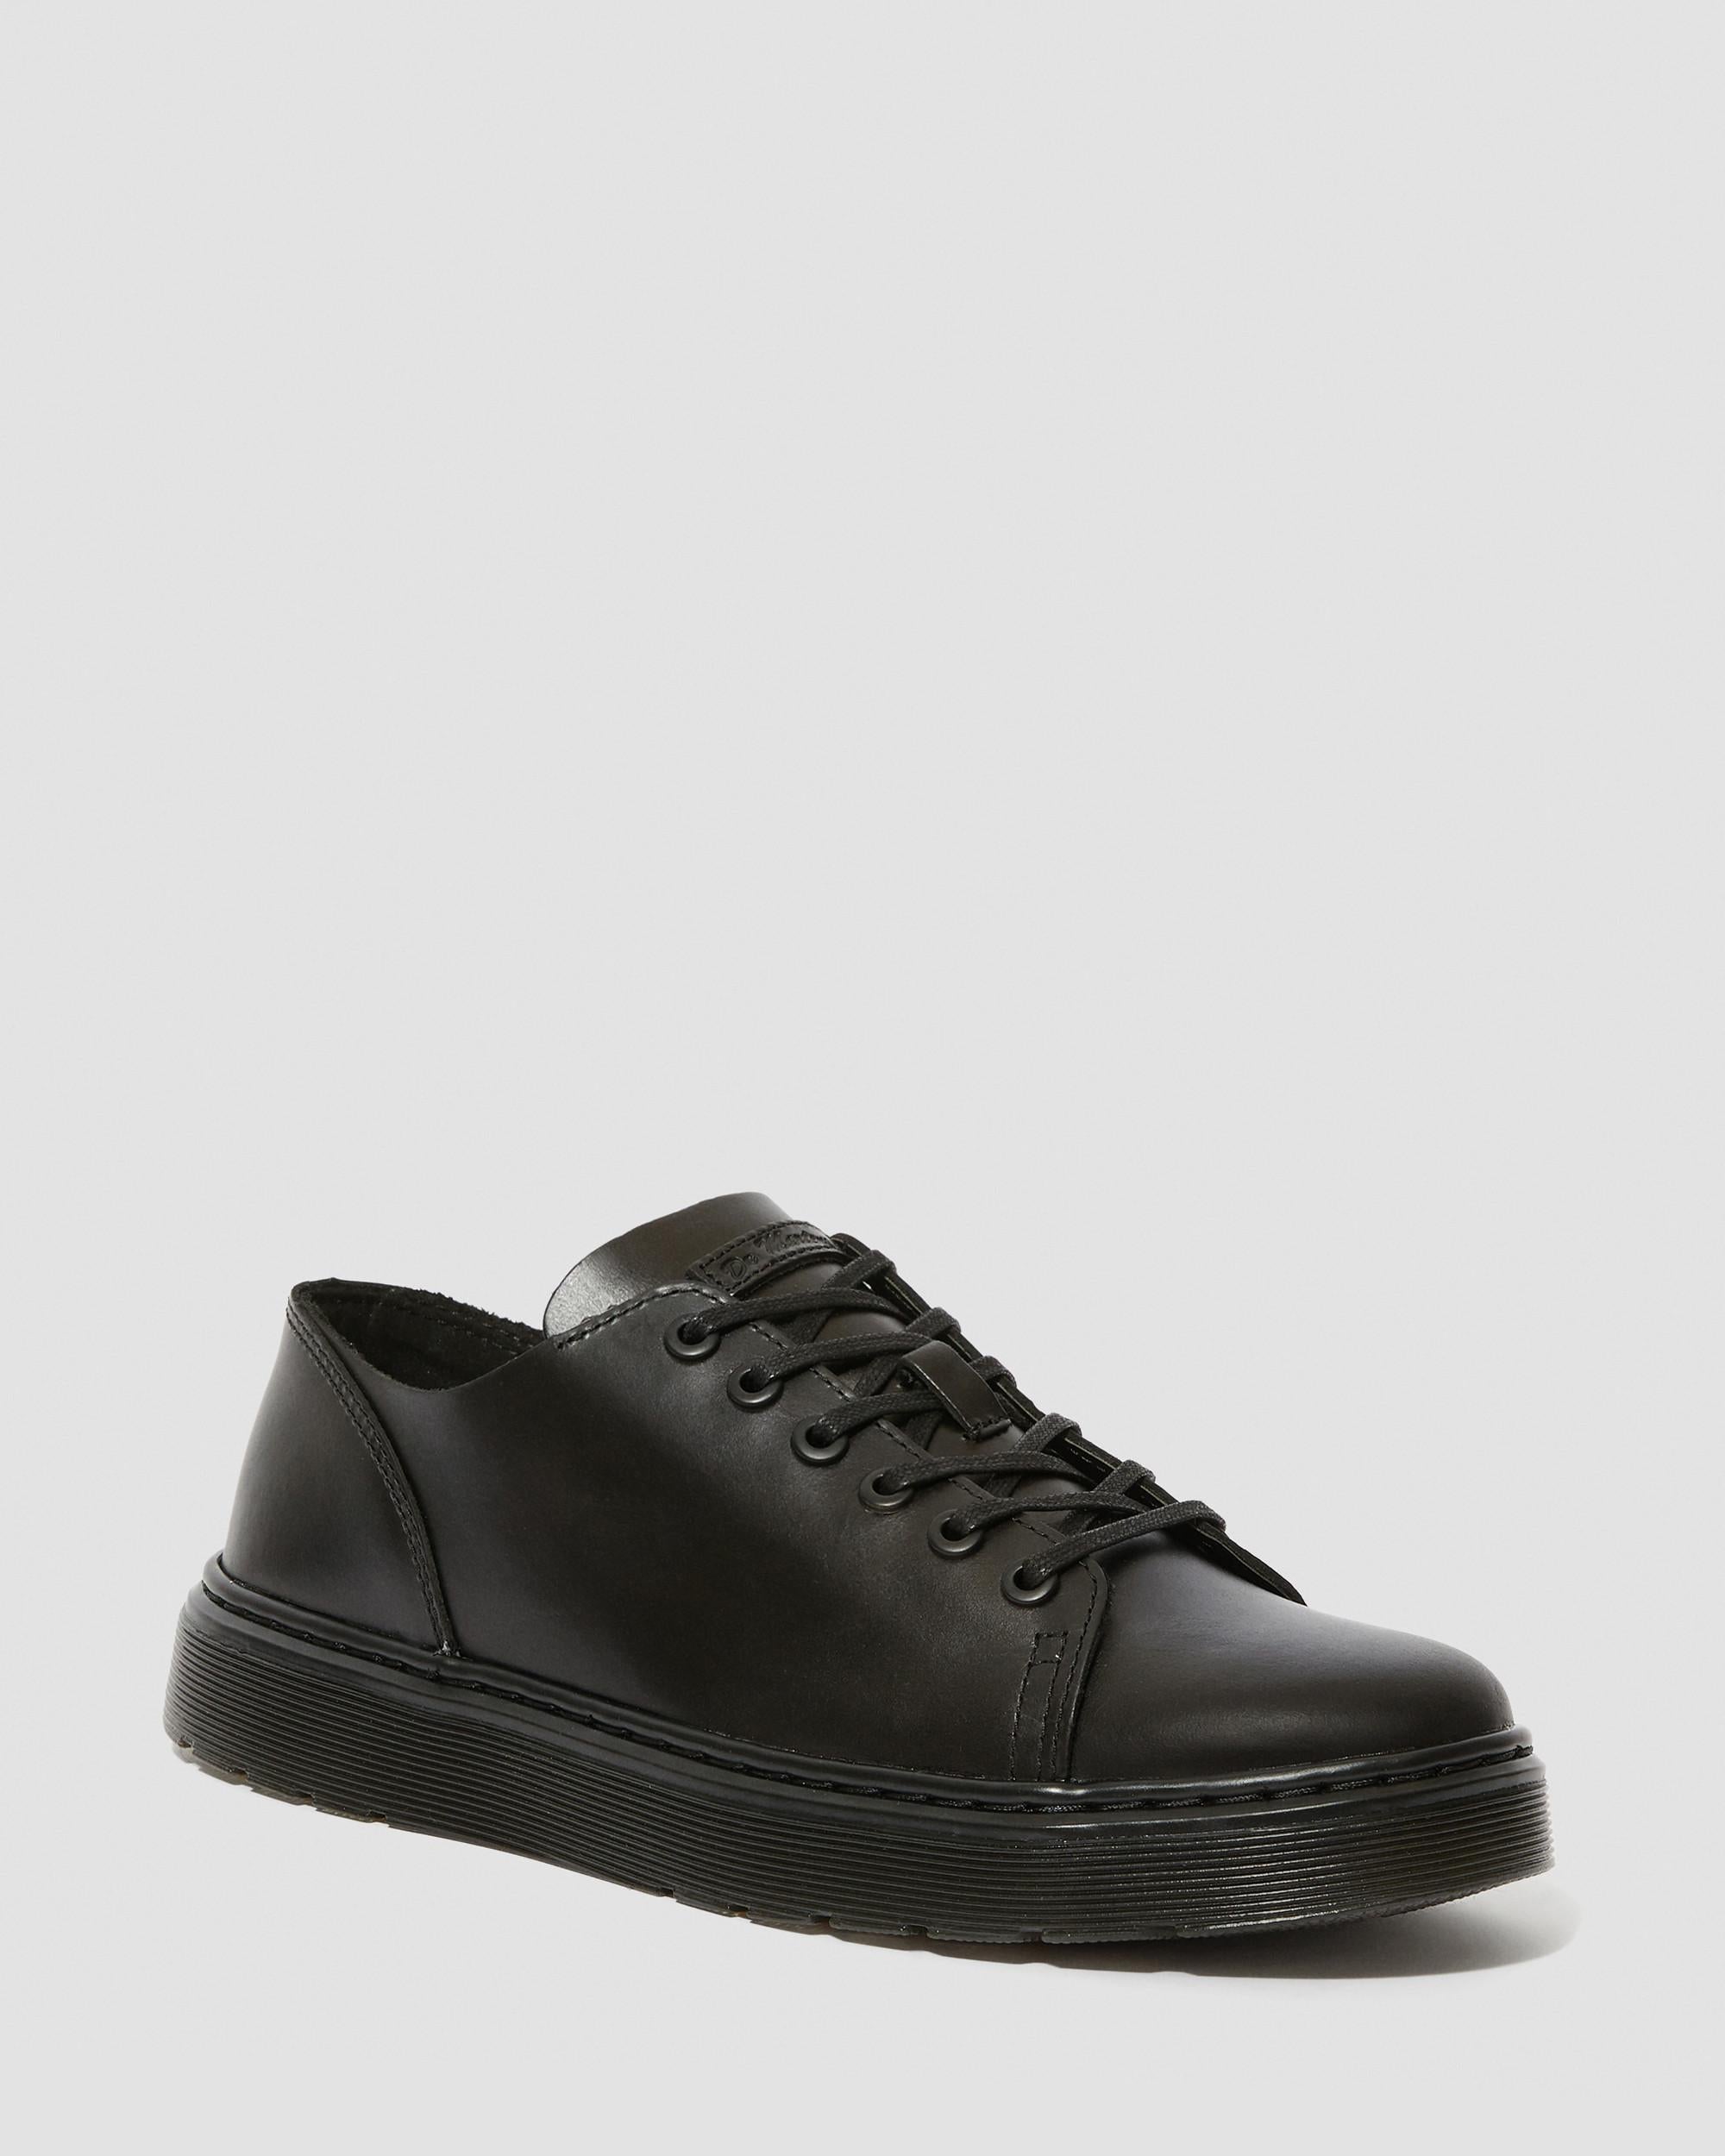 Dante Brando Causal Leather Shoes